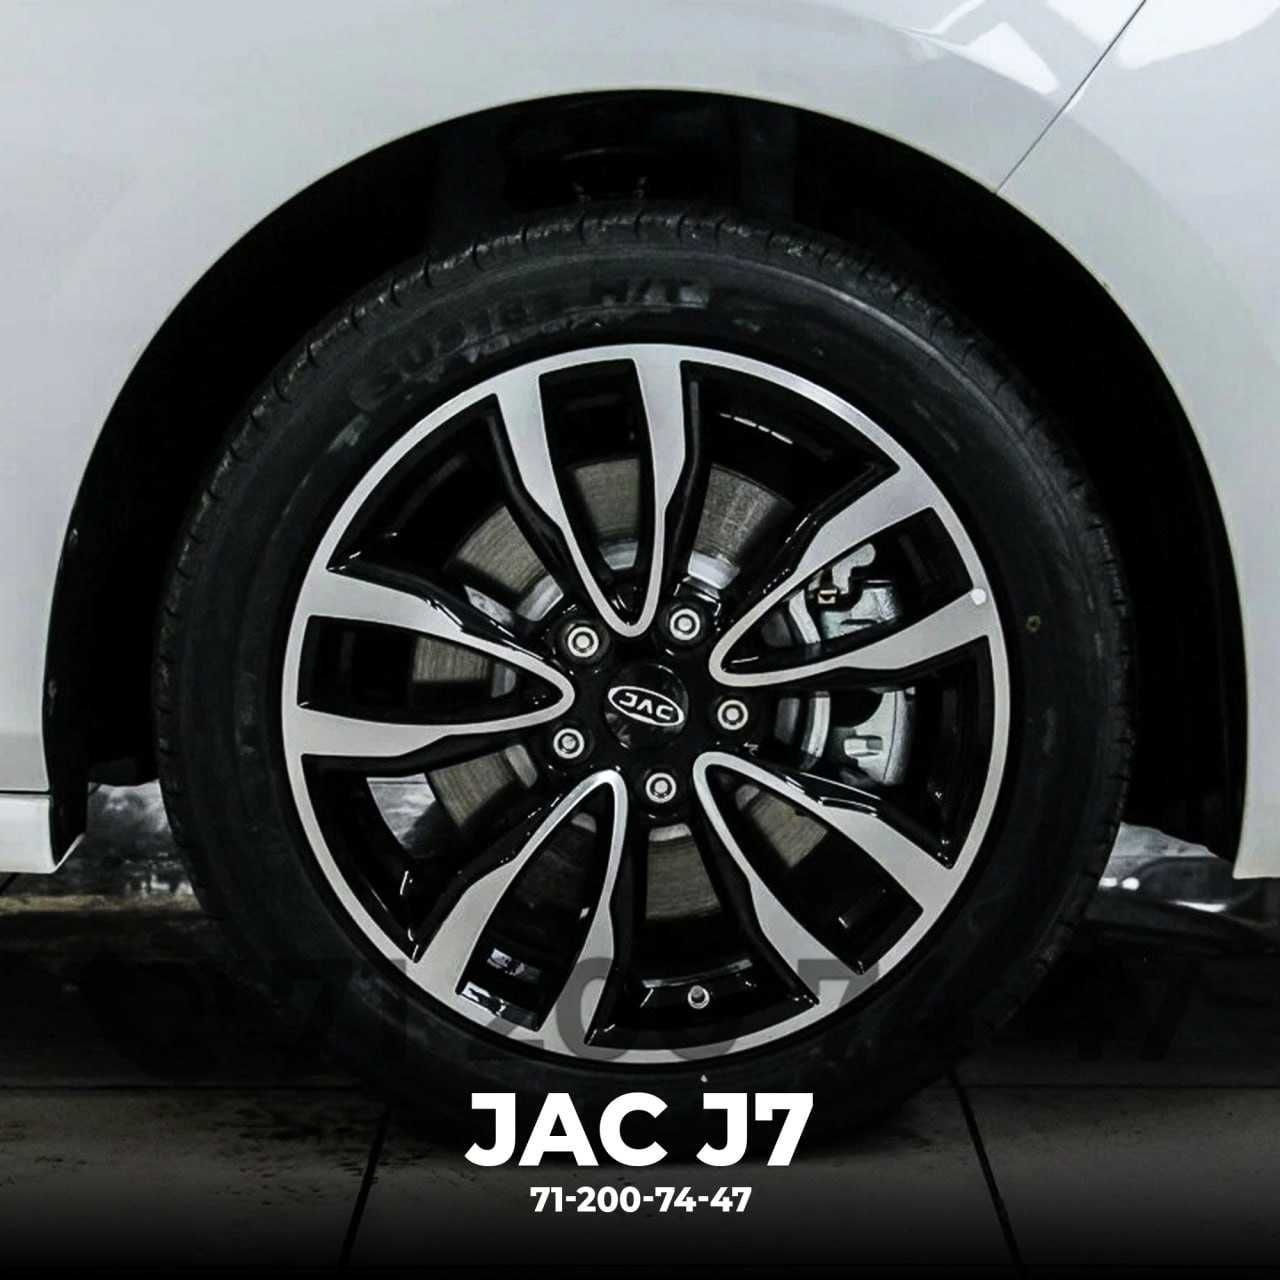 JAc J7  (Monza Пулига ундан яхшироги) 30% бошлангич тулов билан